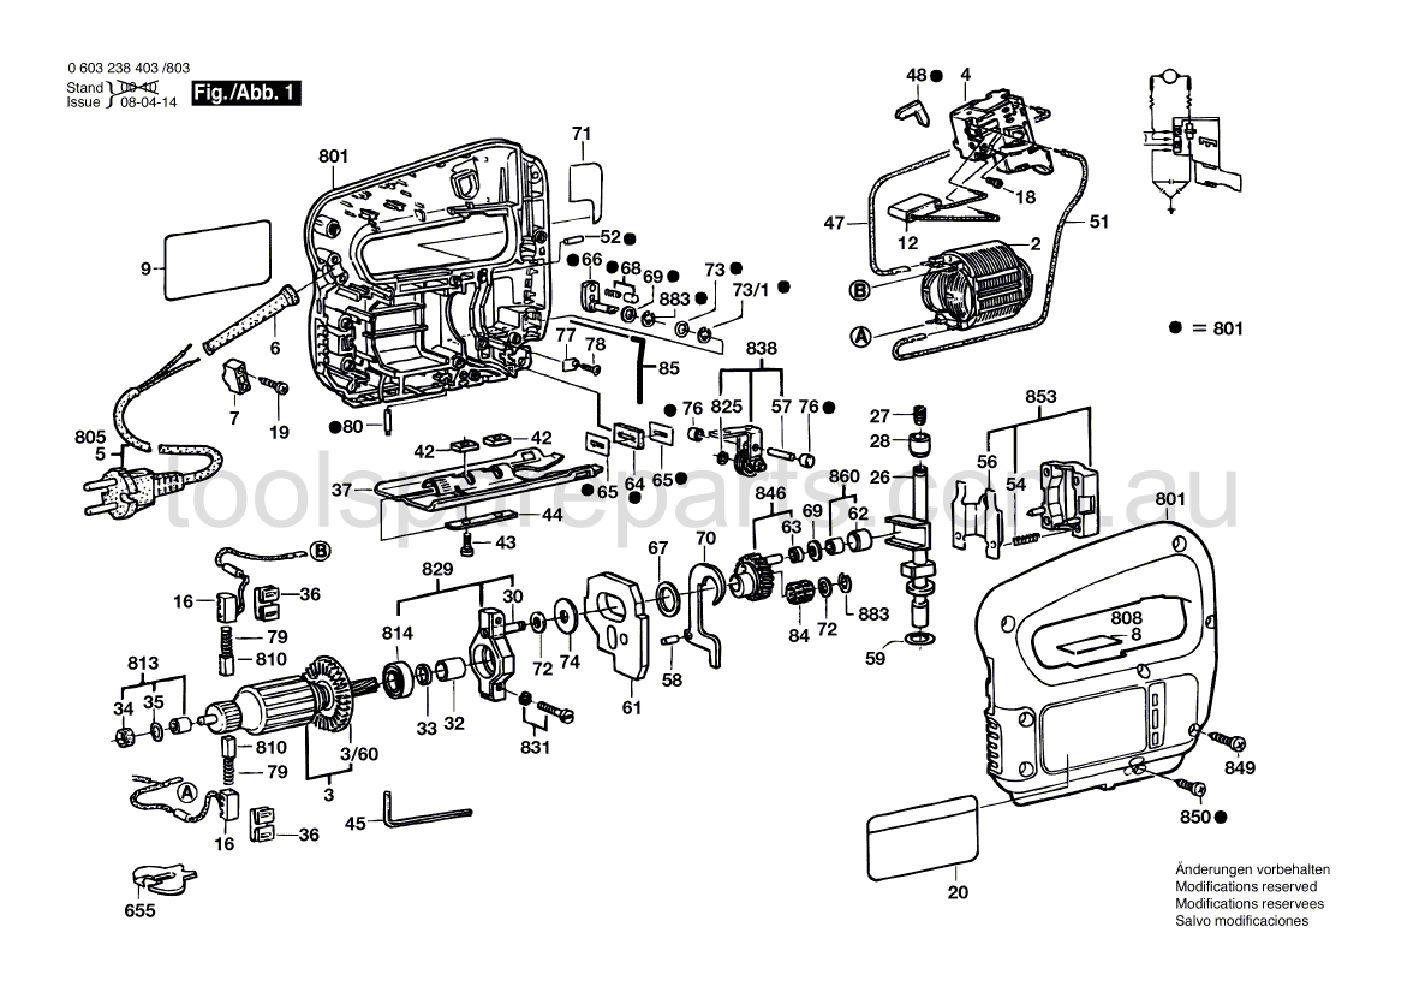 Bosch PST 54 PE 0603238437  Diagram 1